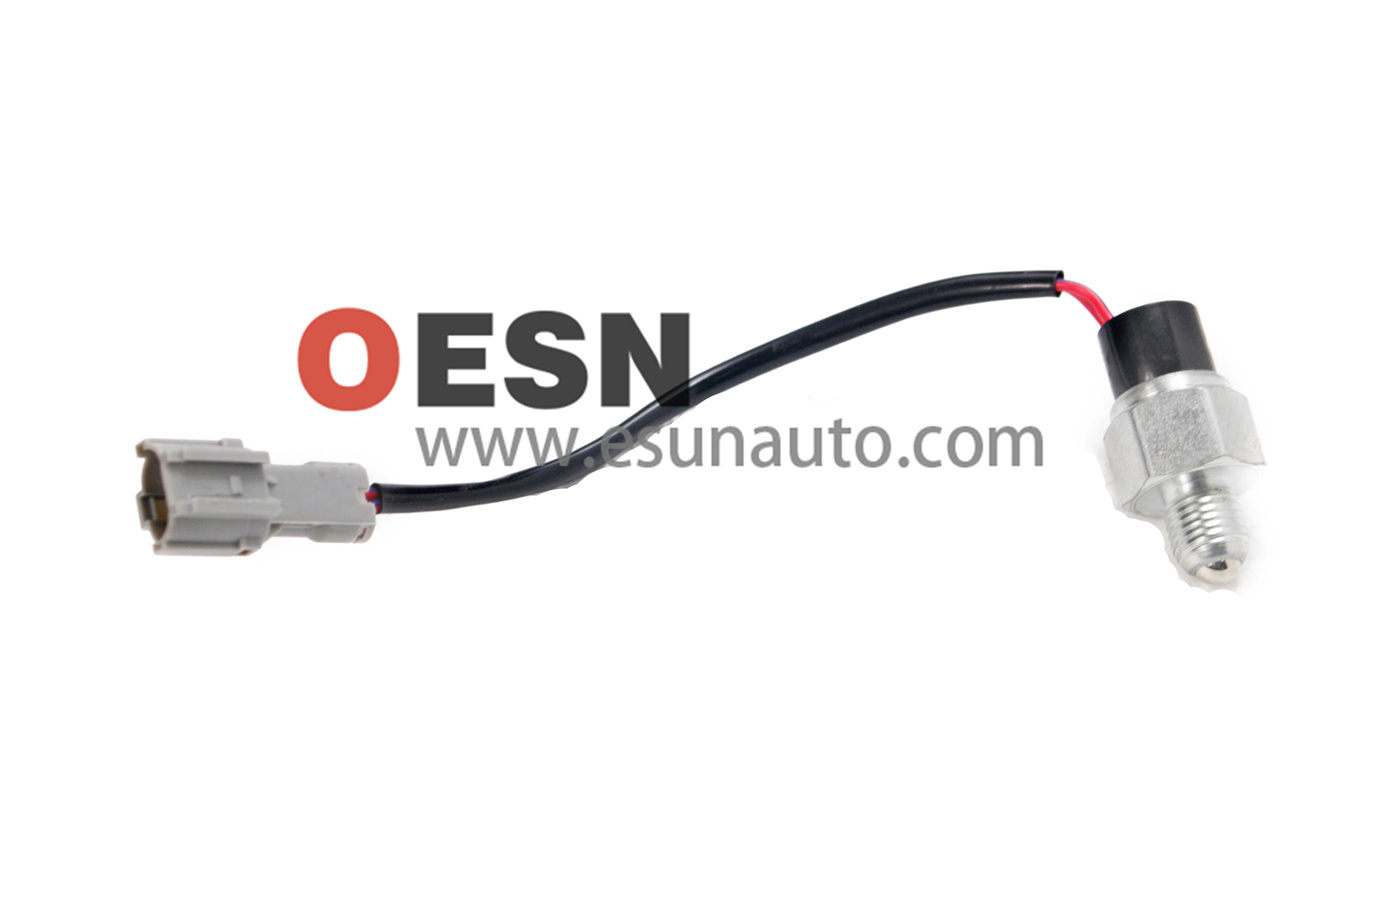 Exhaust brake sending unit  ESN90010  OEM 8982421731 8971659470